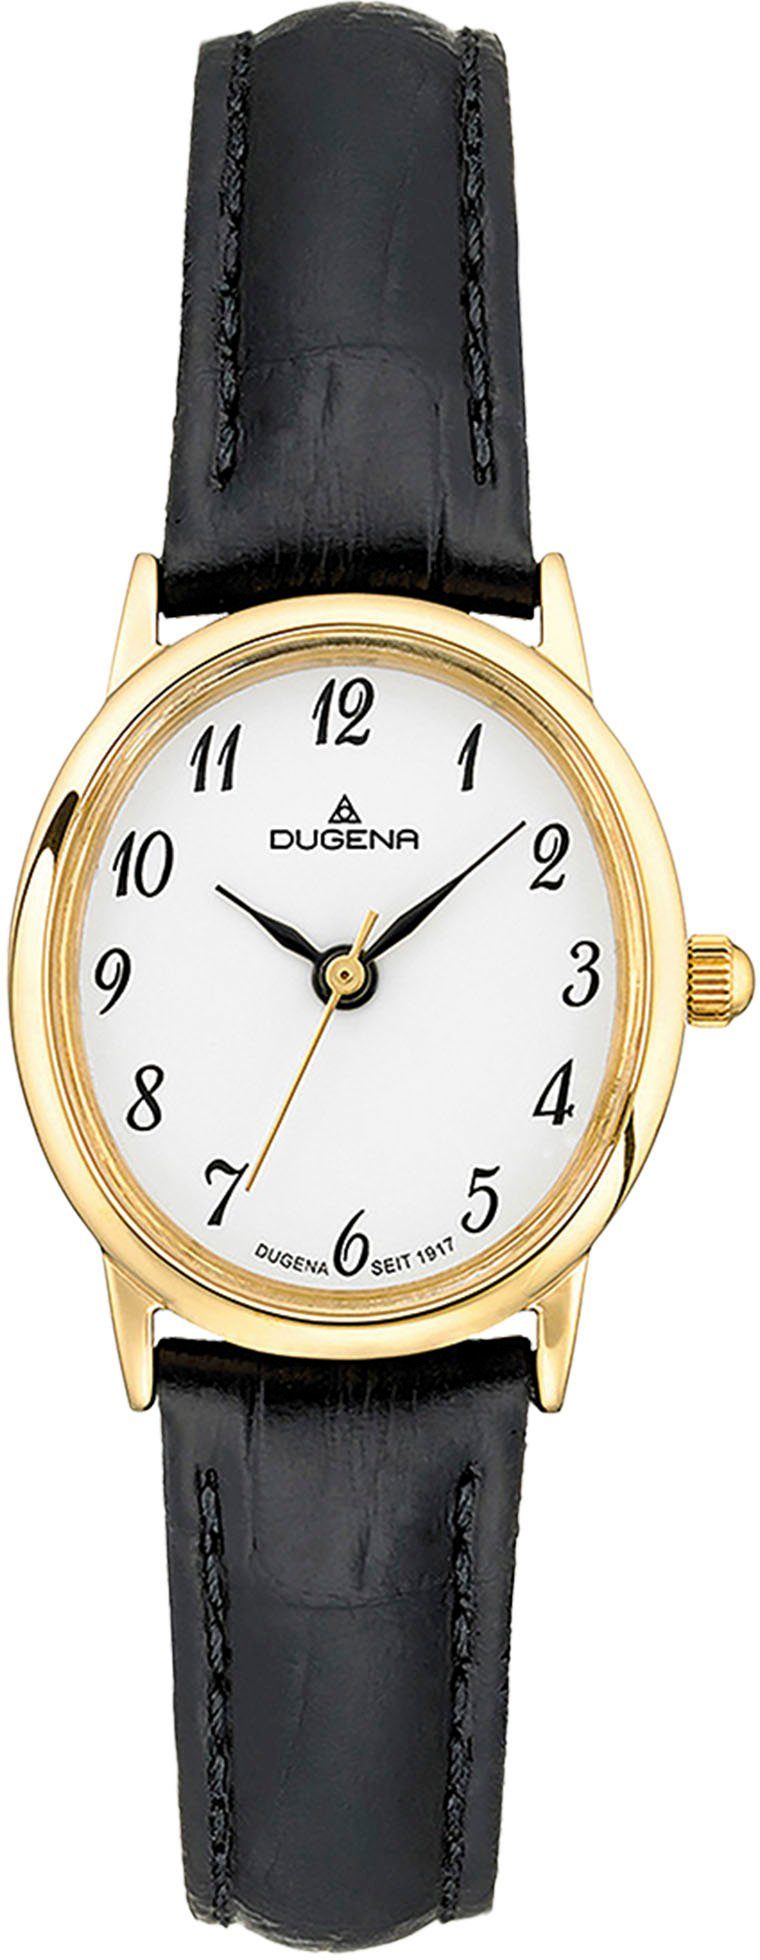 Dugena Quarzuhr Vintage, 4460783 Gold